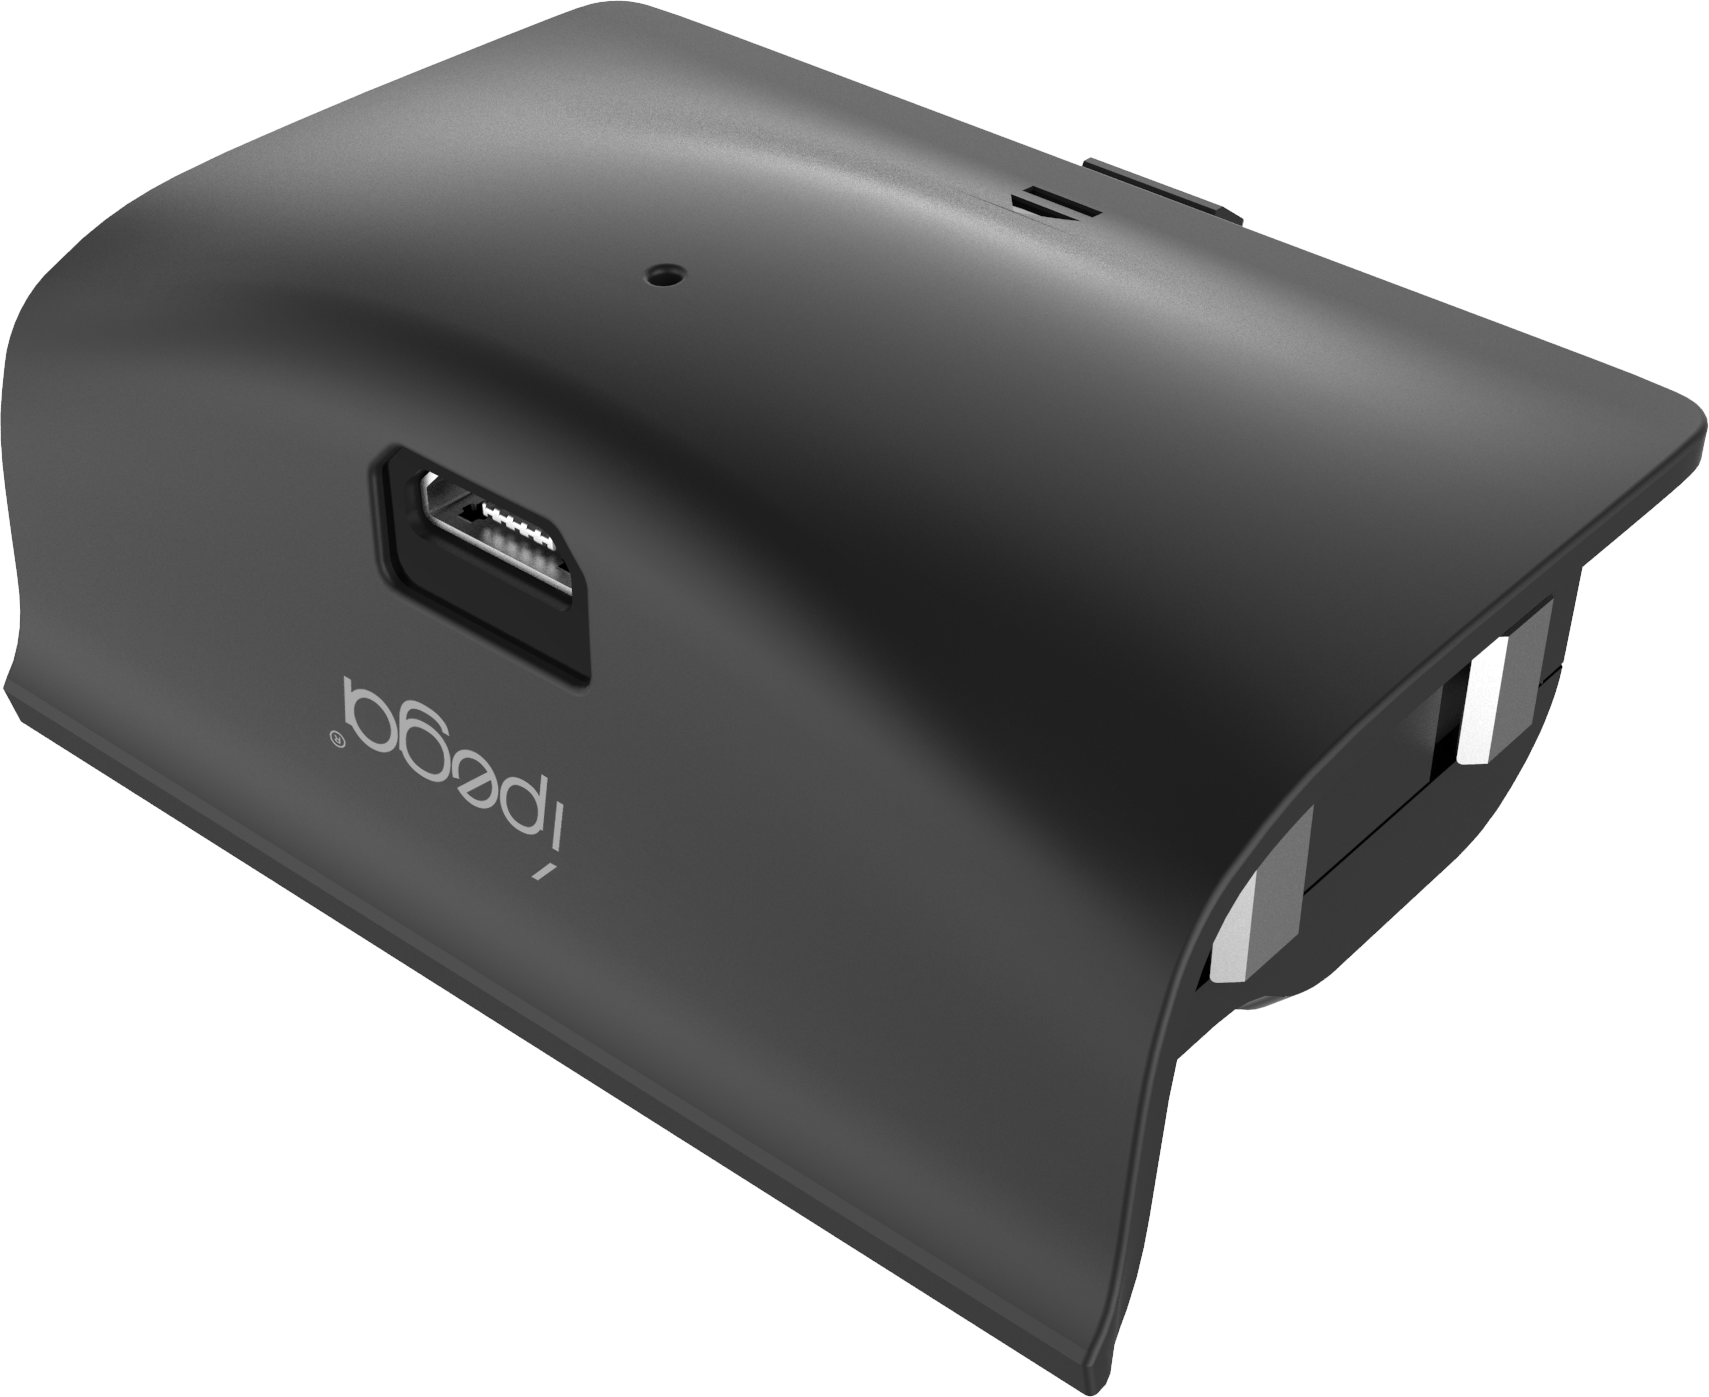 Baterie pro ovladač Xbox One / One X / One S - iPega, XB001 1400mAh